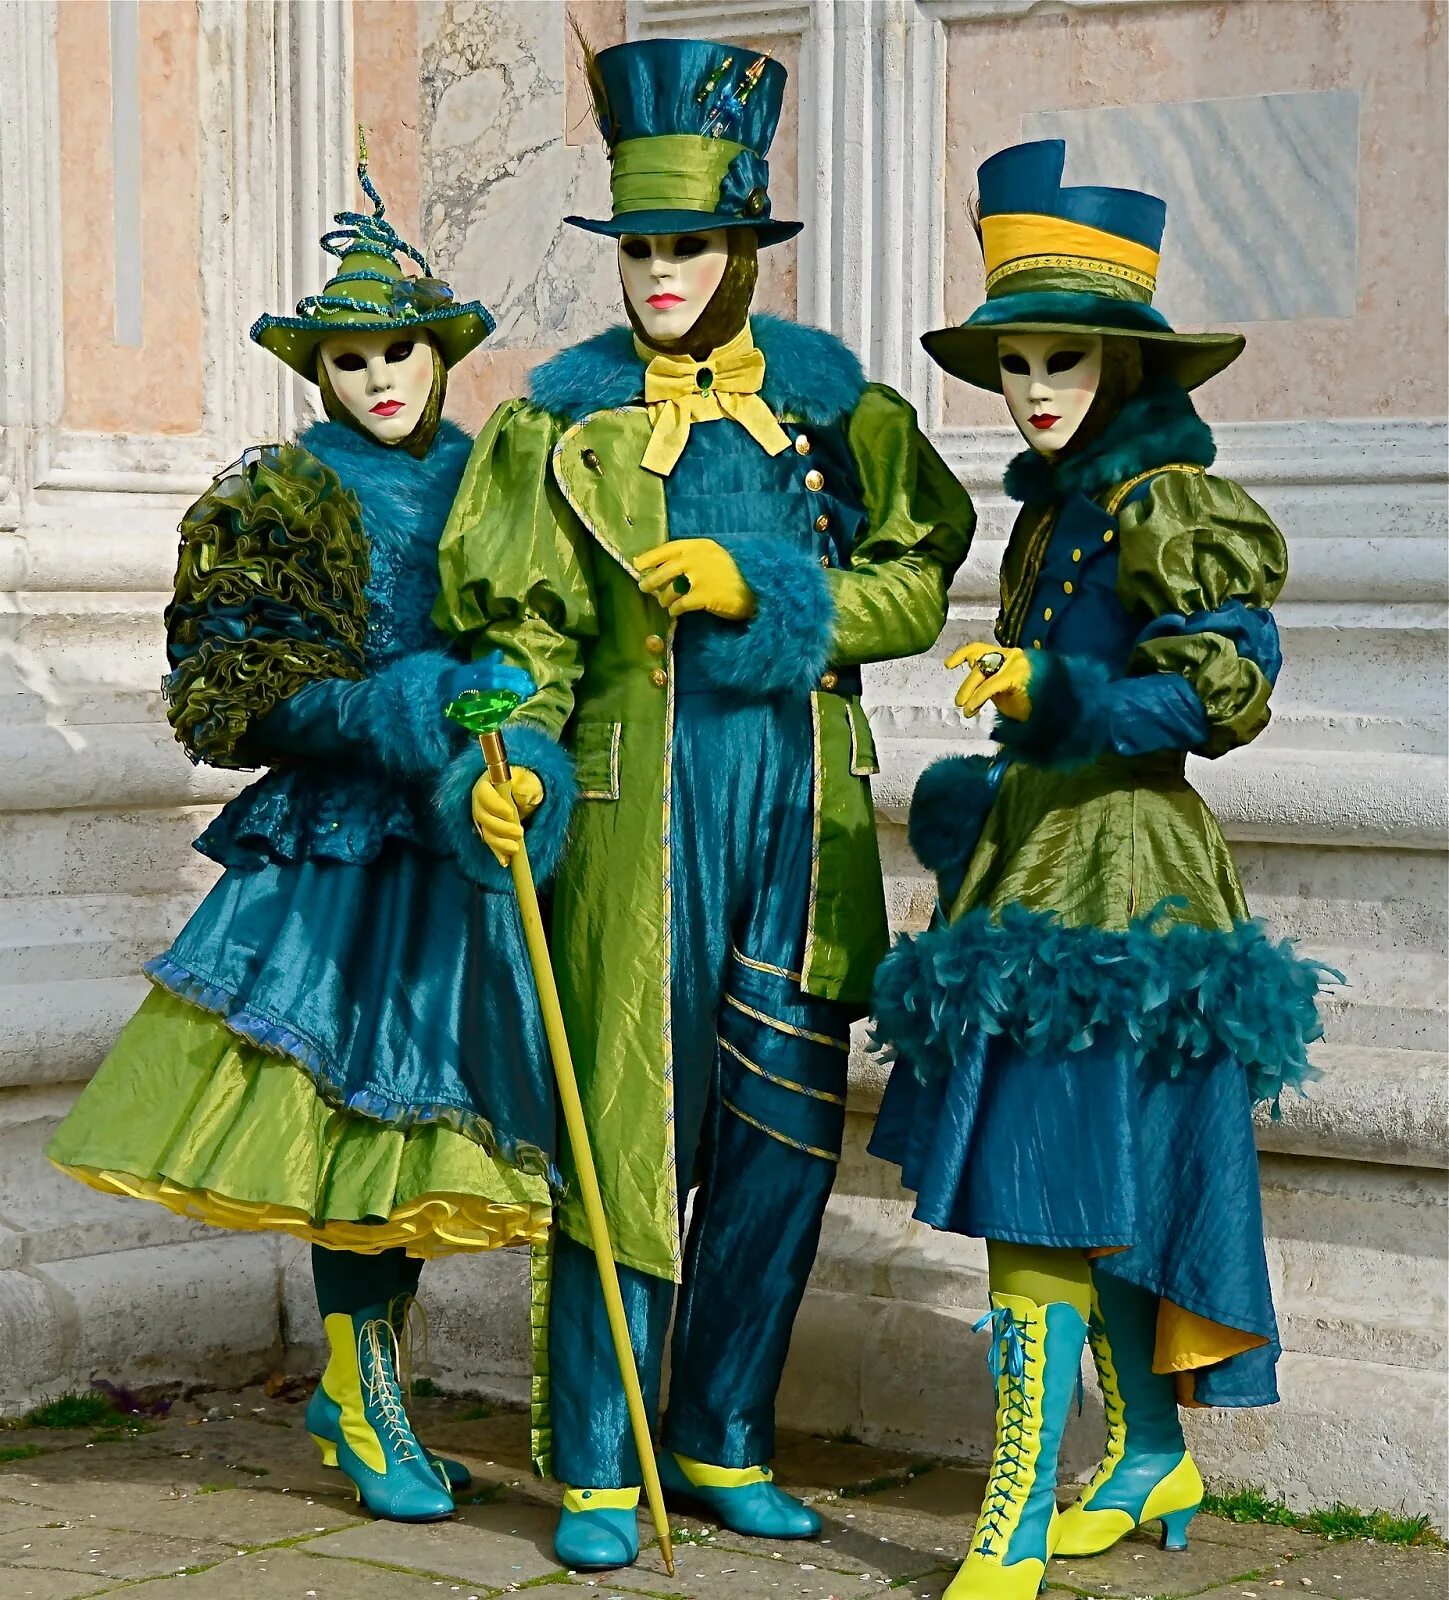 Маскарад Венеция костюмы. Маскарад Венеция odejda. Карнавальные костюмы в венецианском стиле. Венецианский карнавал костюмы.